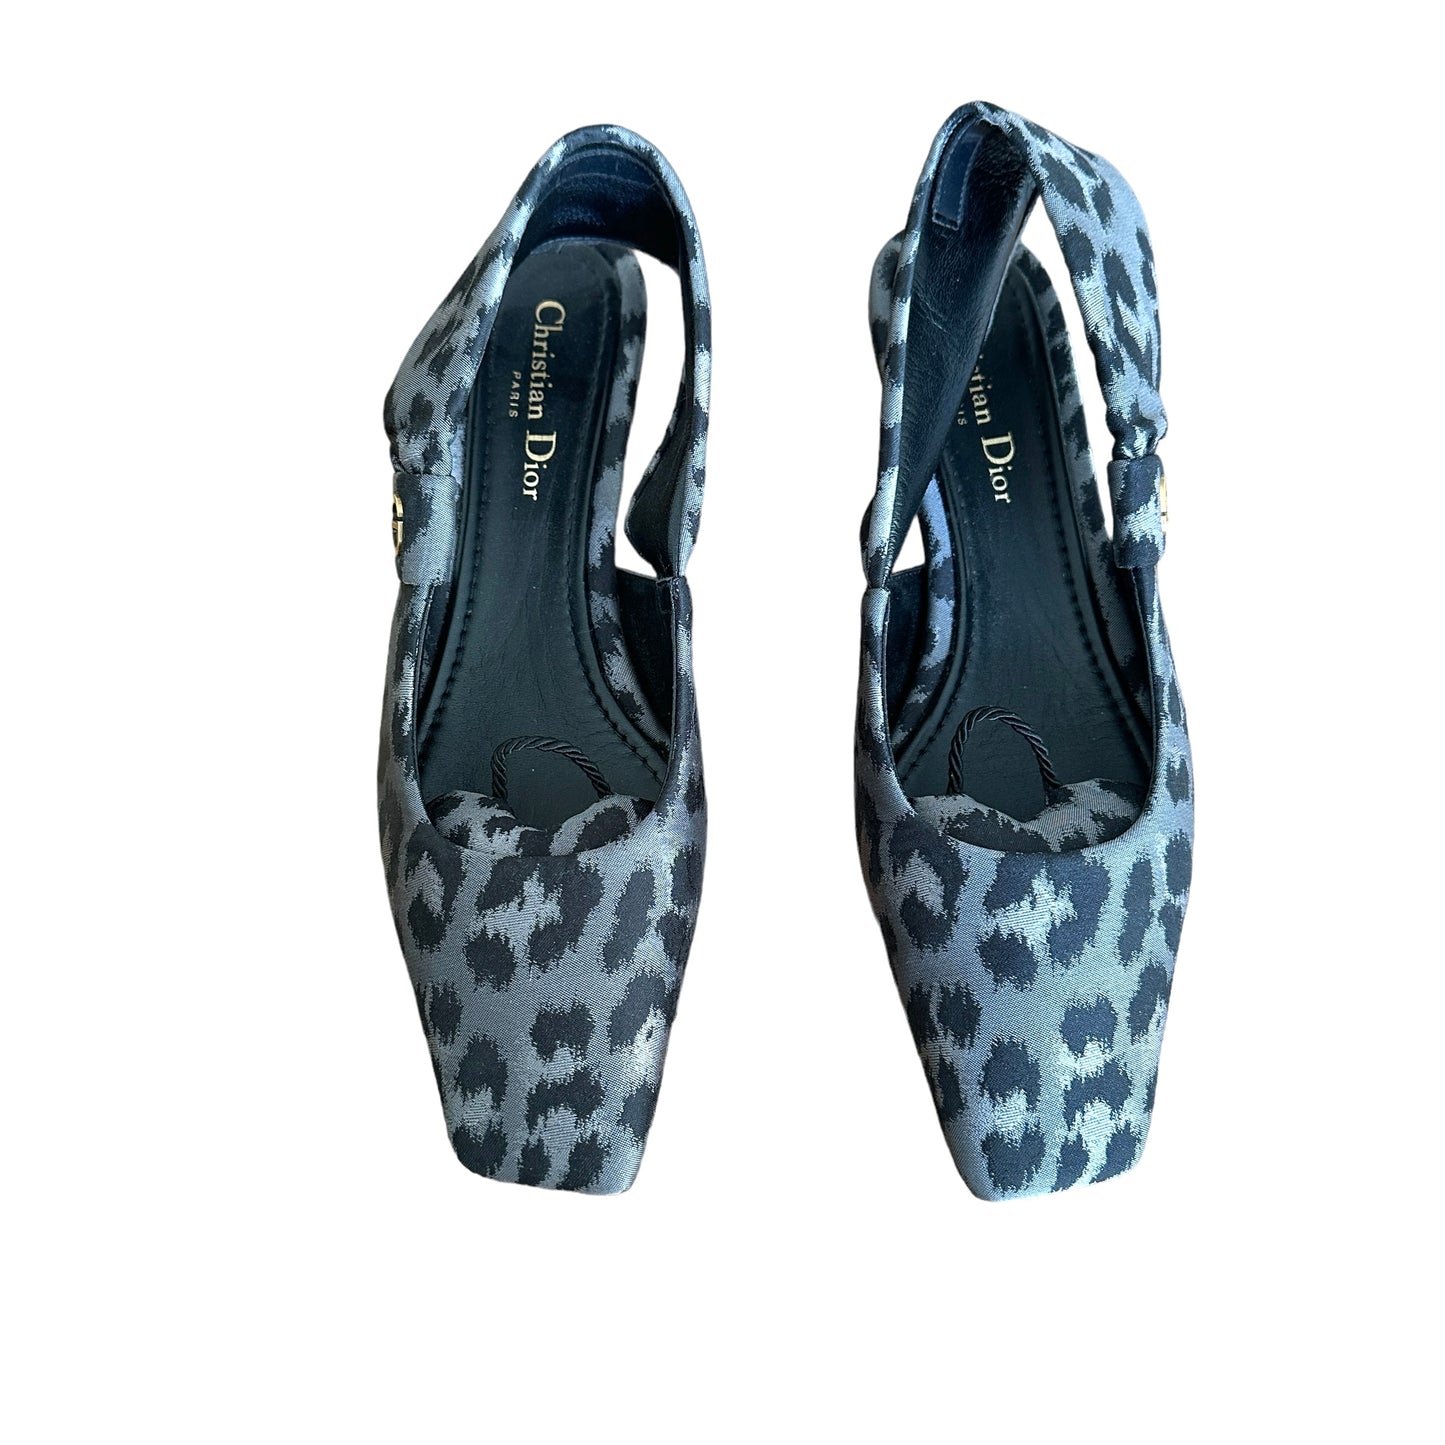 Leopard Slingback Shoes - 8.5